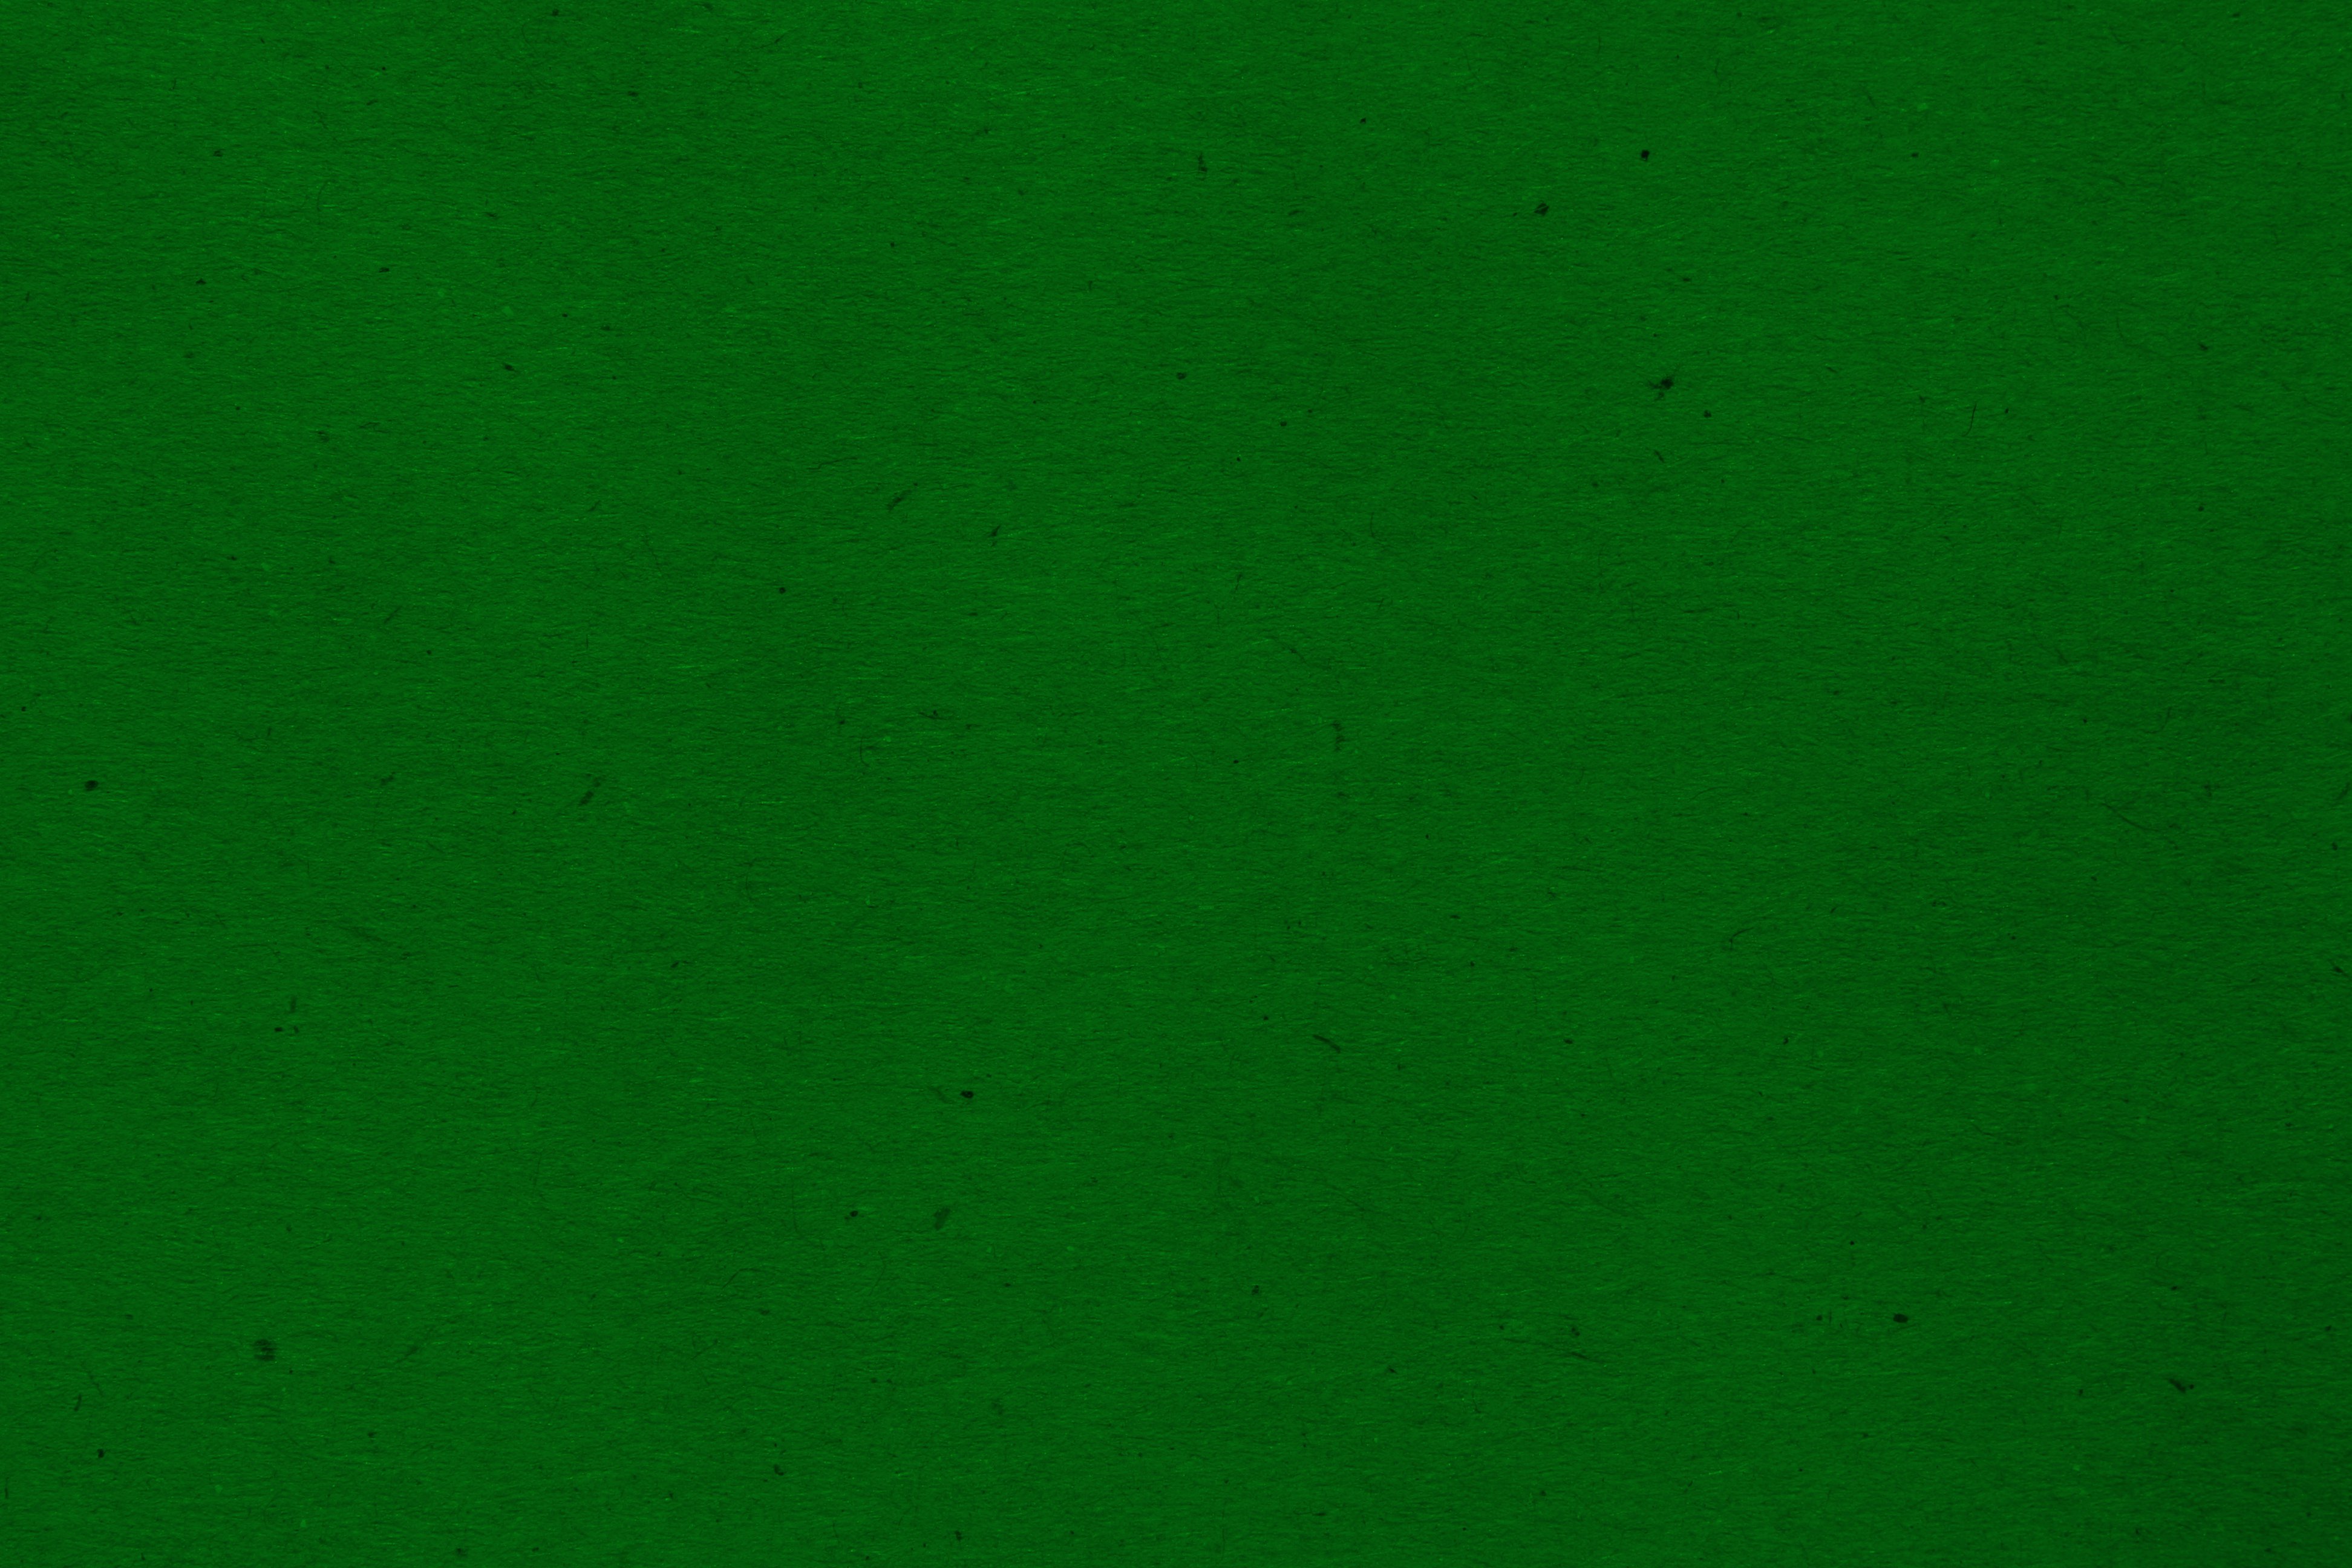  kelly green high resolution image 640 x 480 4 kb jpeg kelly green 3888x2592